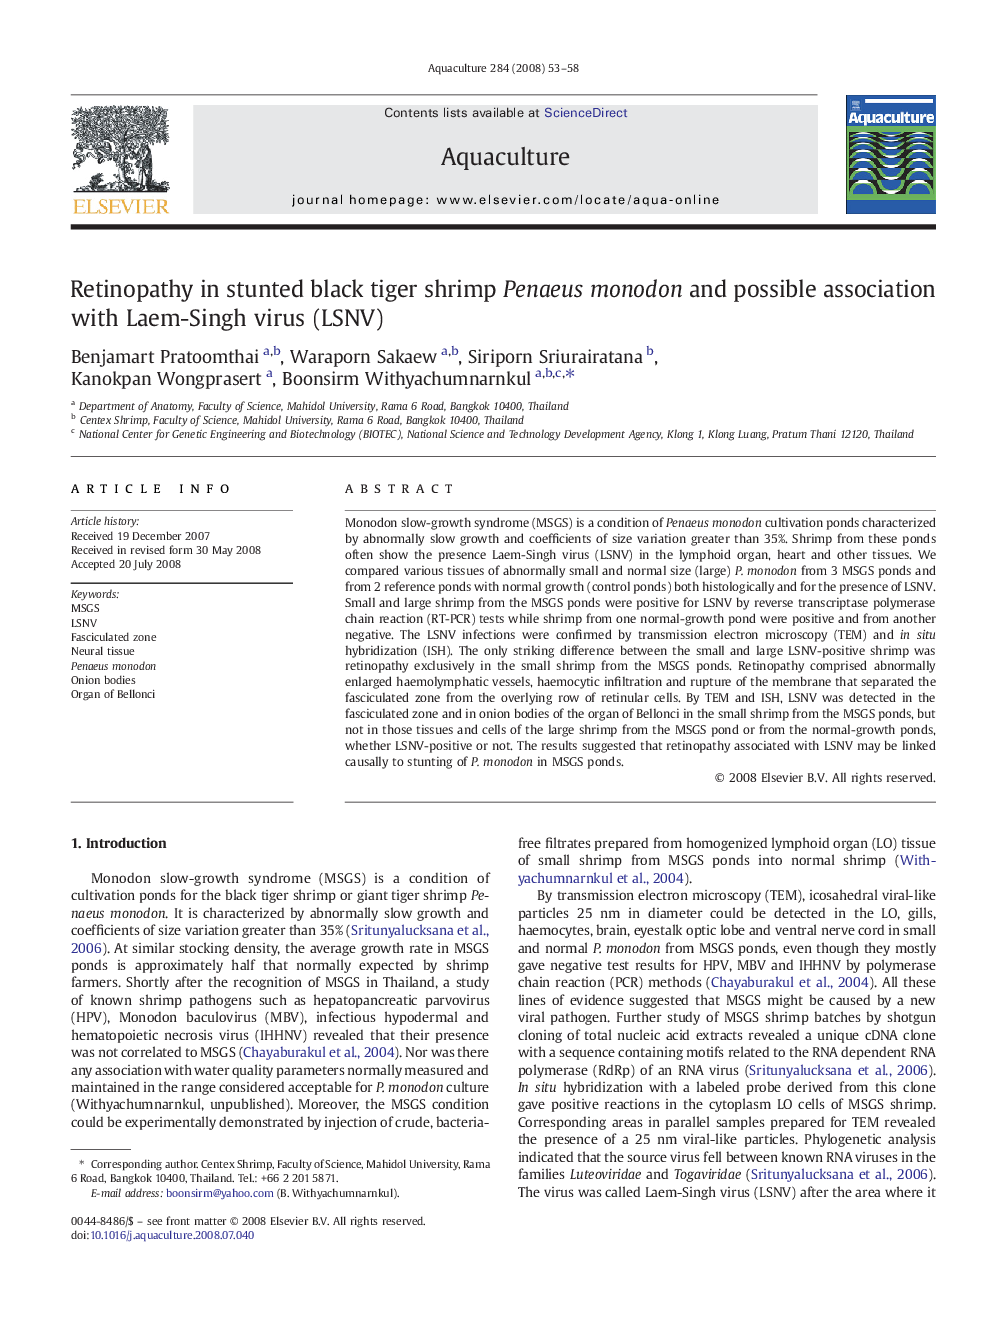 Retinopathy in stunted black tiger shrimp Penaeus monodon and possible association with Laem-Singh virus (LSNV)